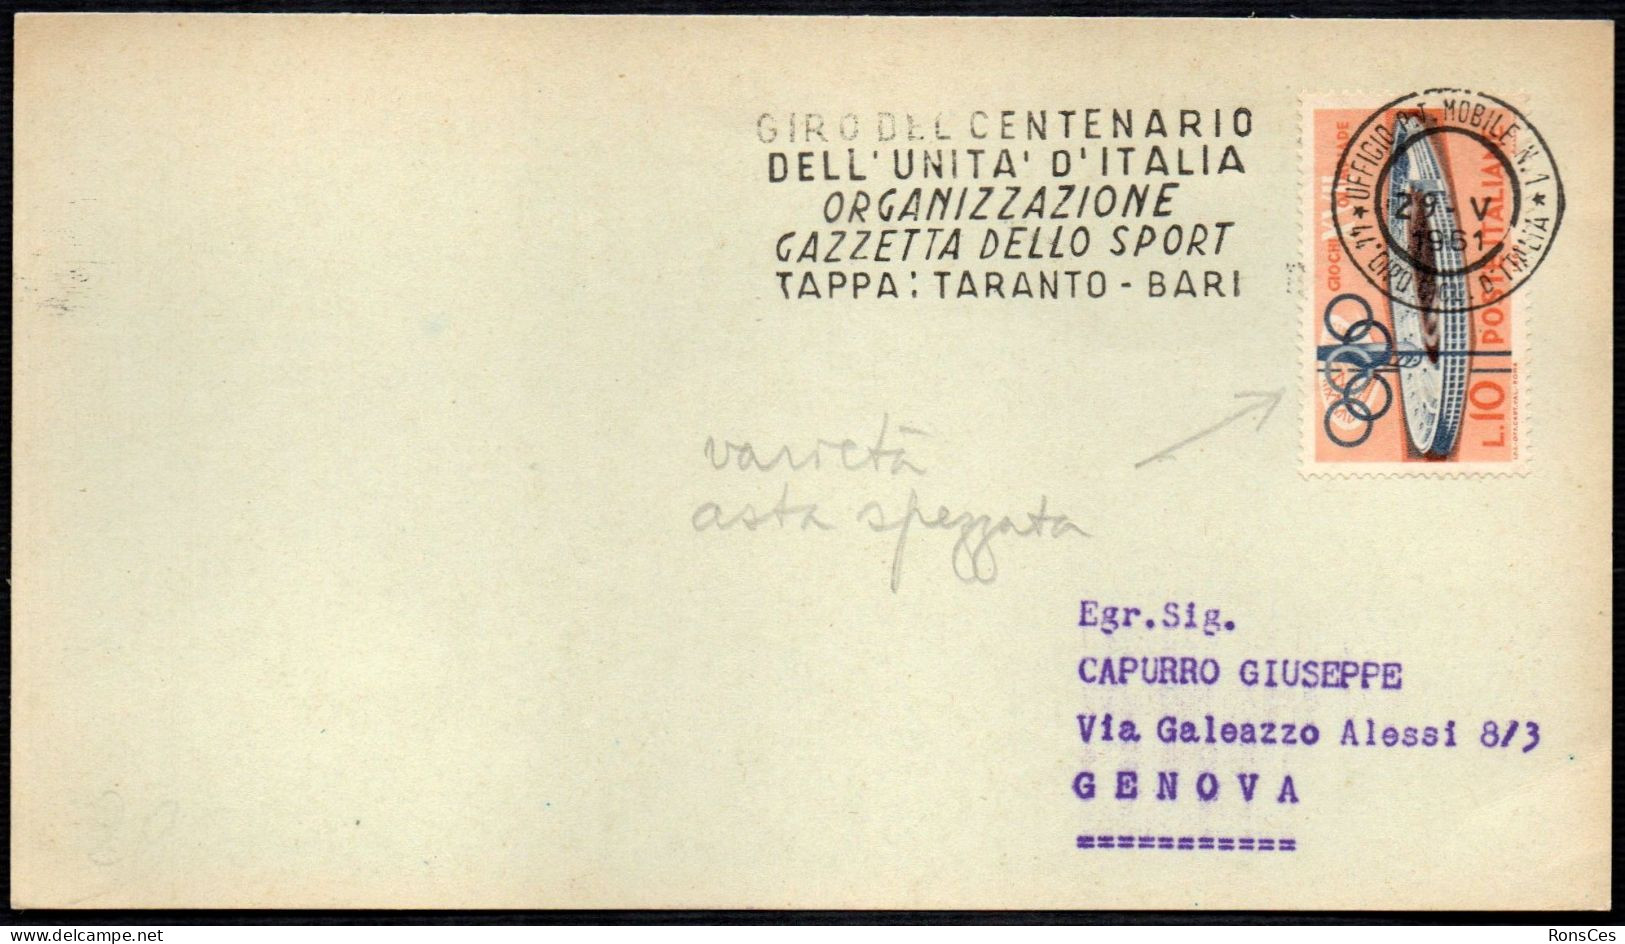 CYCLING - ITALIA 29.05.1961 GIRO DEL CENTENARIO DELL'UNITA' D'ITALIA - GAZZETTA SPORT - TARANTO / BARI - VARIETA' - A - Cyclisme